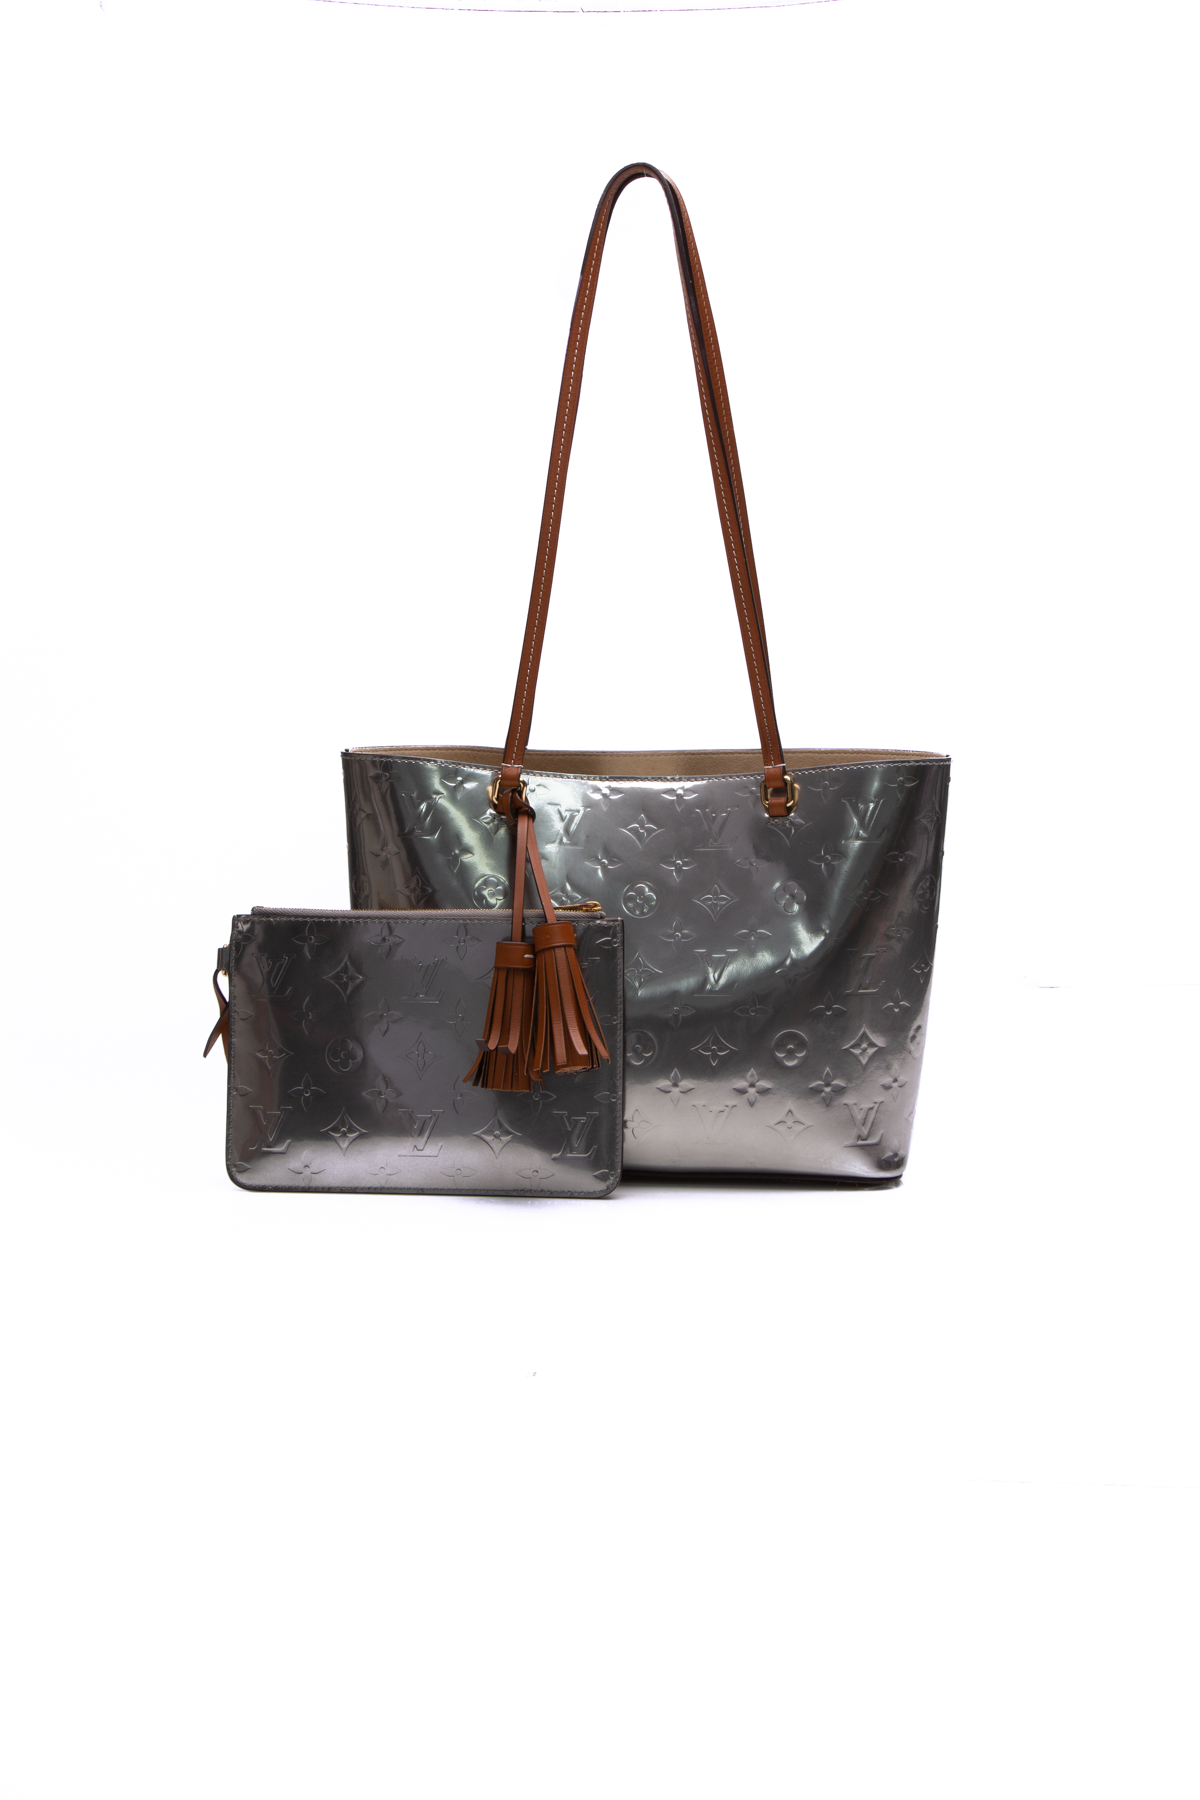 Louis Vuitton Beach Tote Handbag